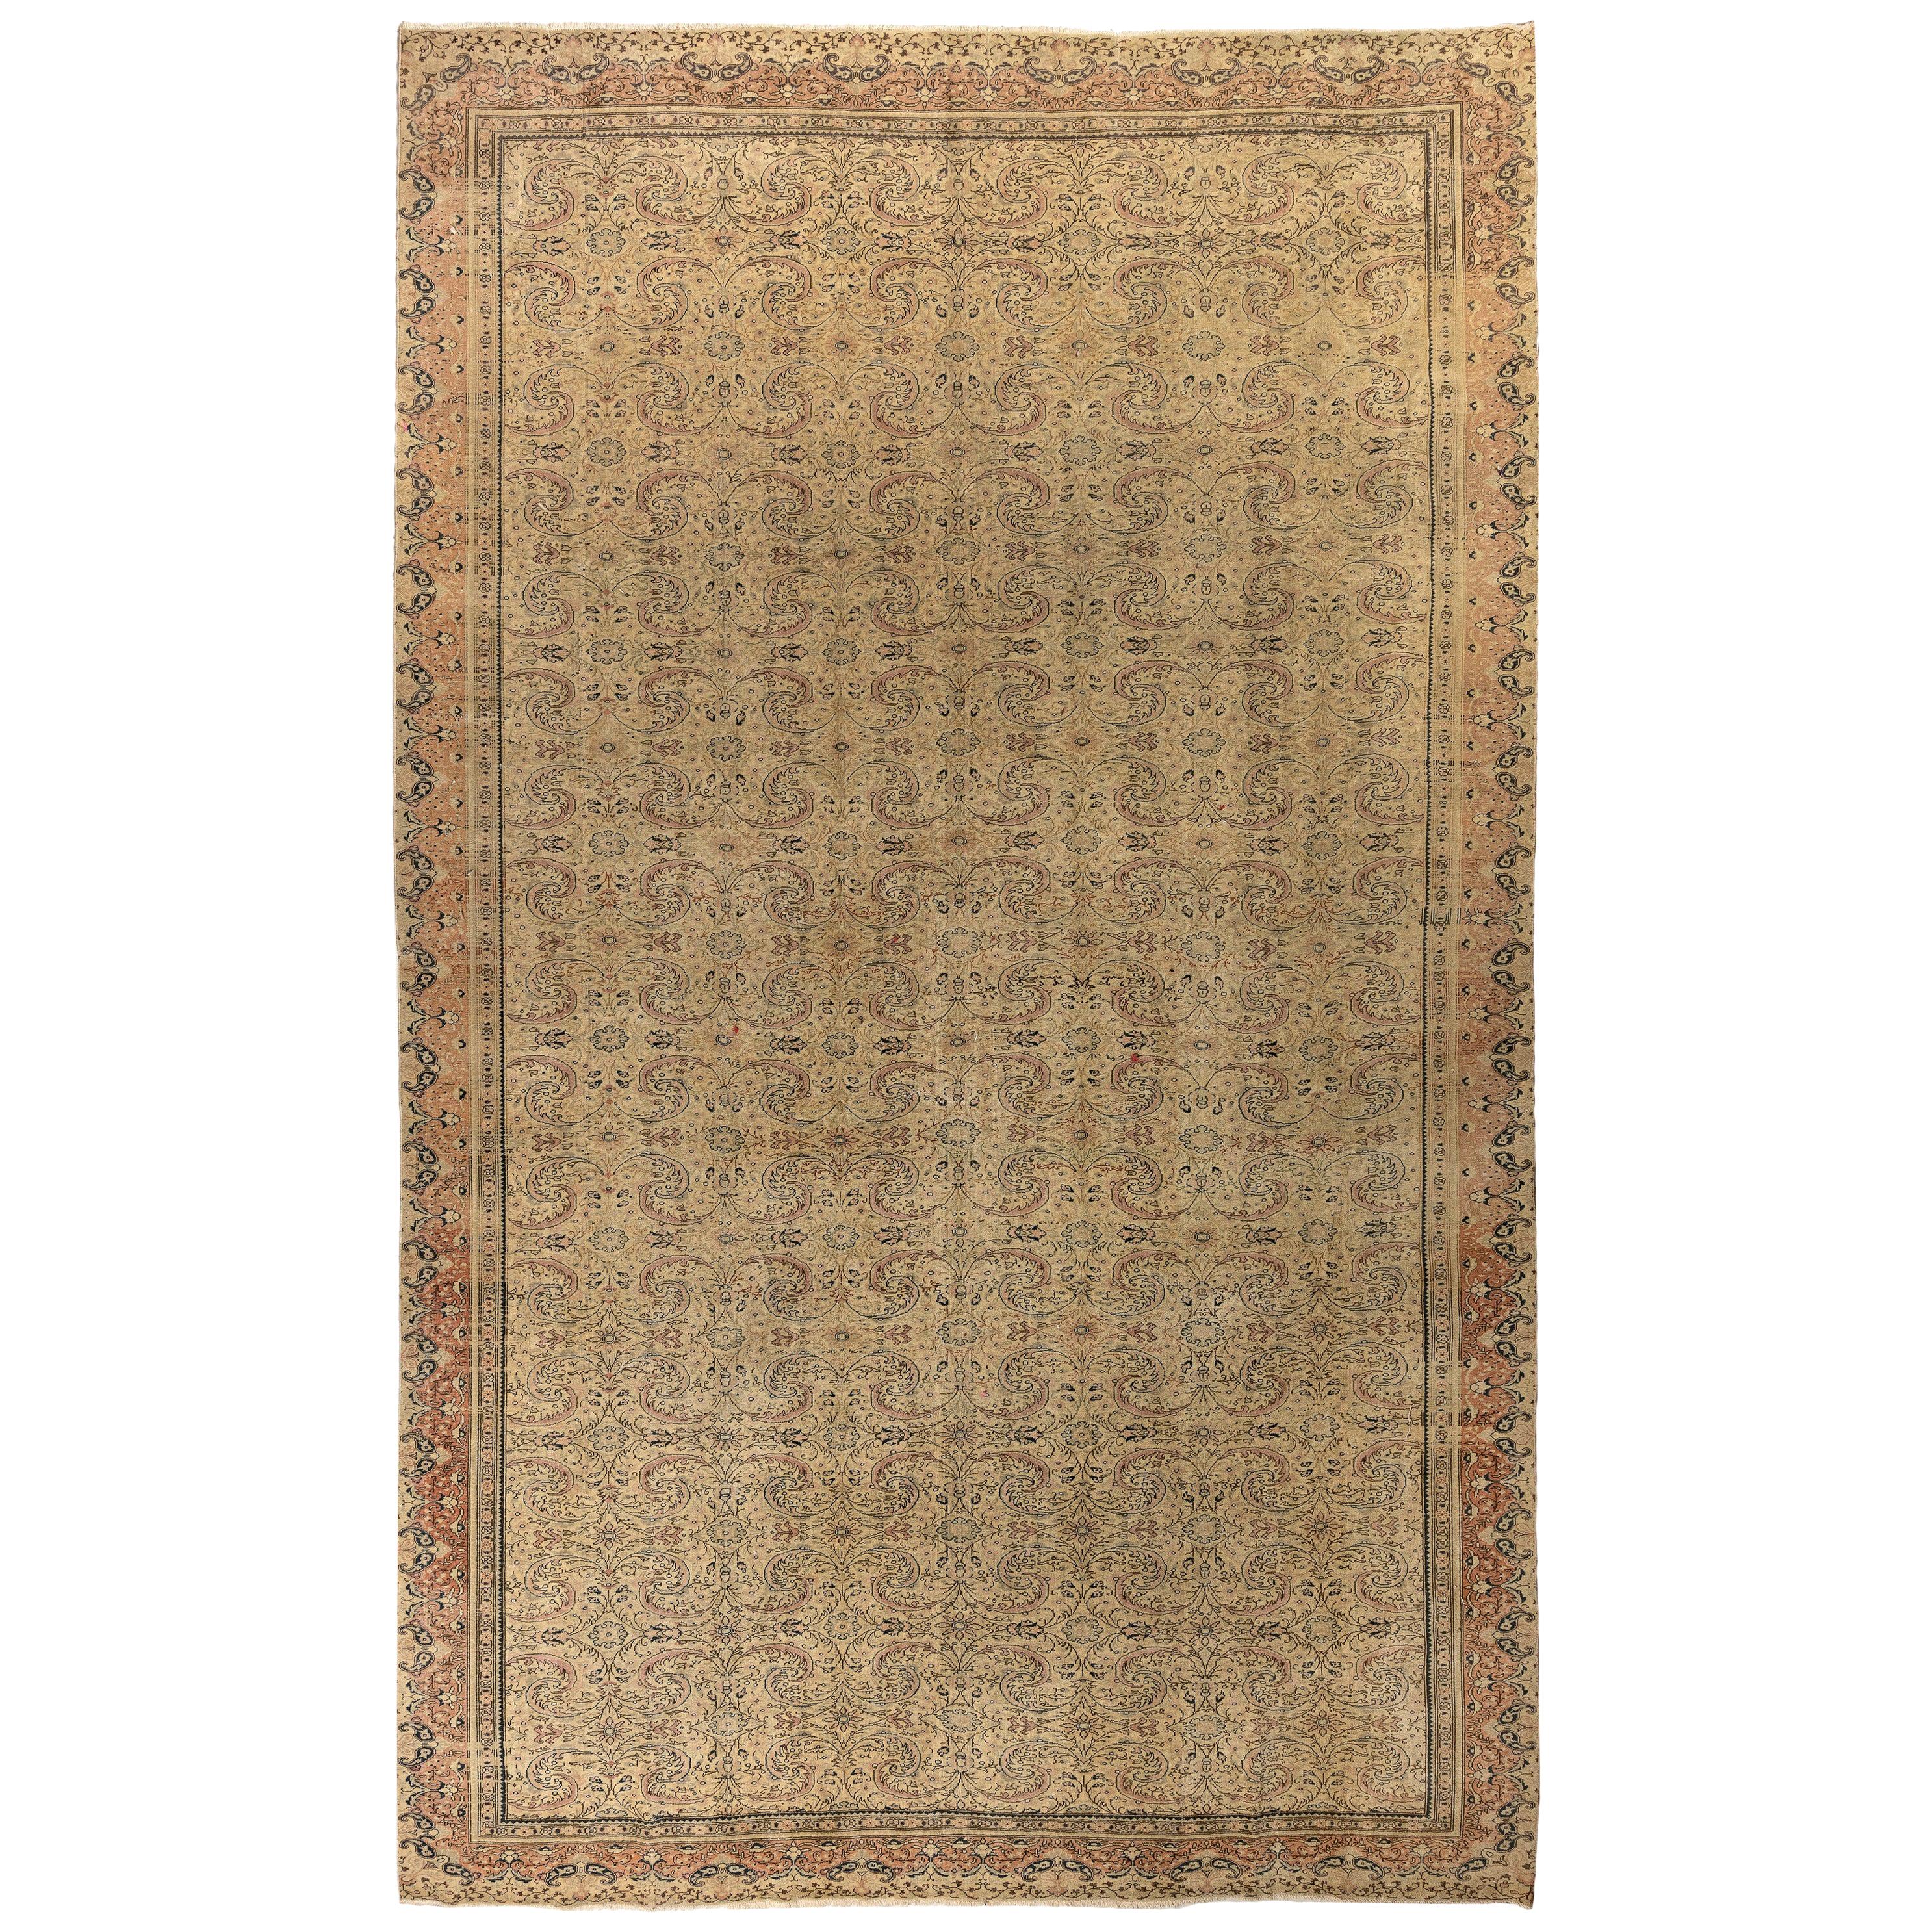 10x13.7 Ft Very Fine Vintage Turkish Sivas Rug, Wool Carpet, Floor Covering